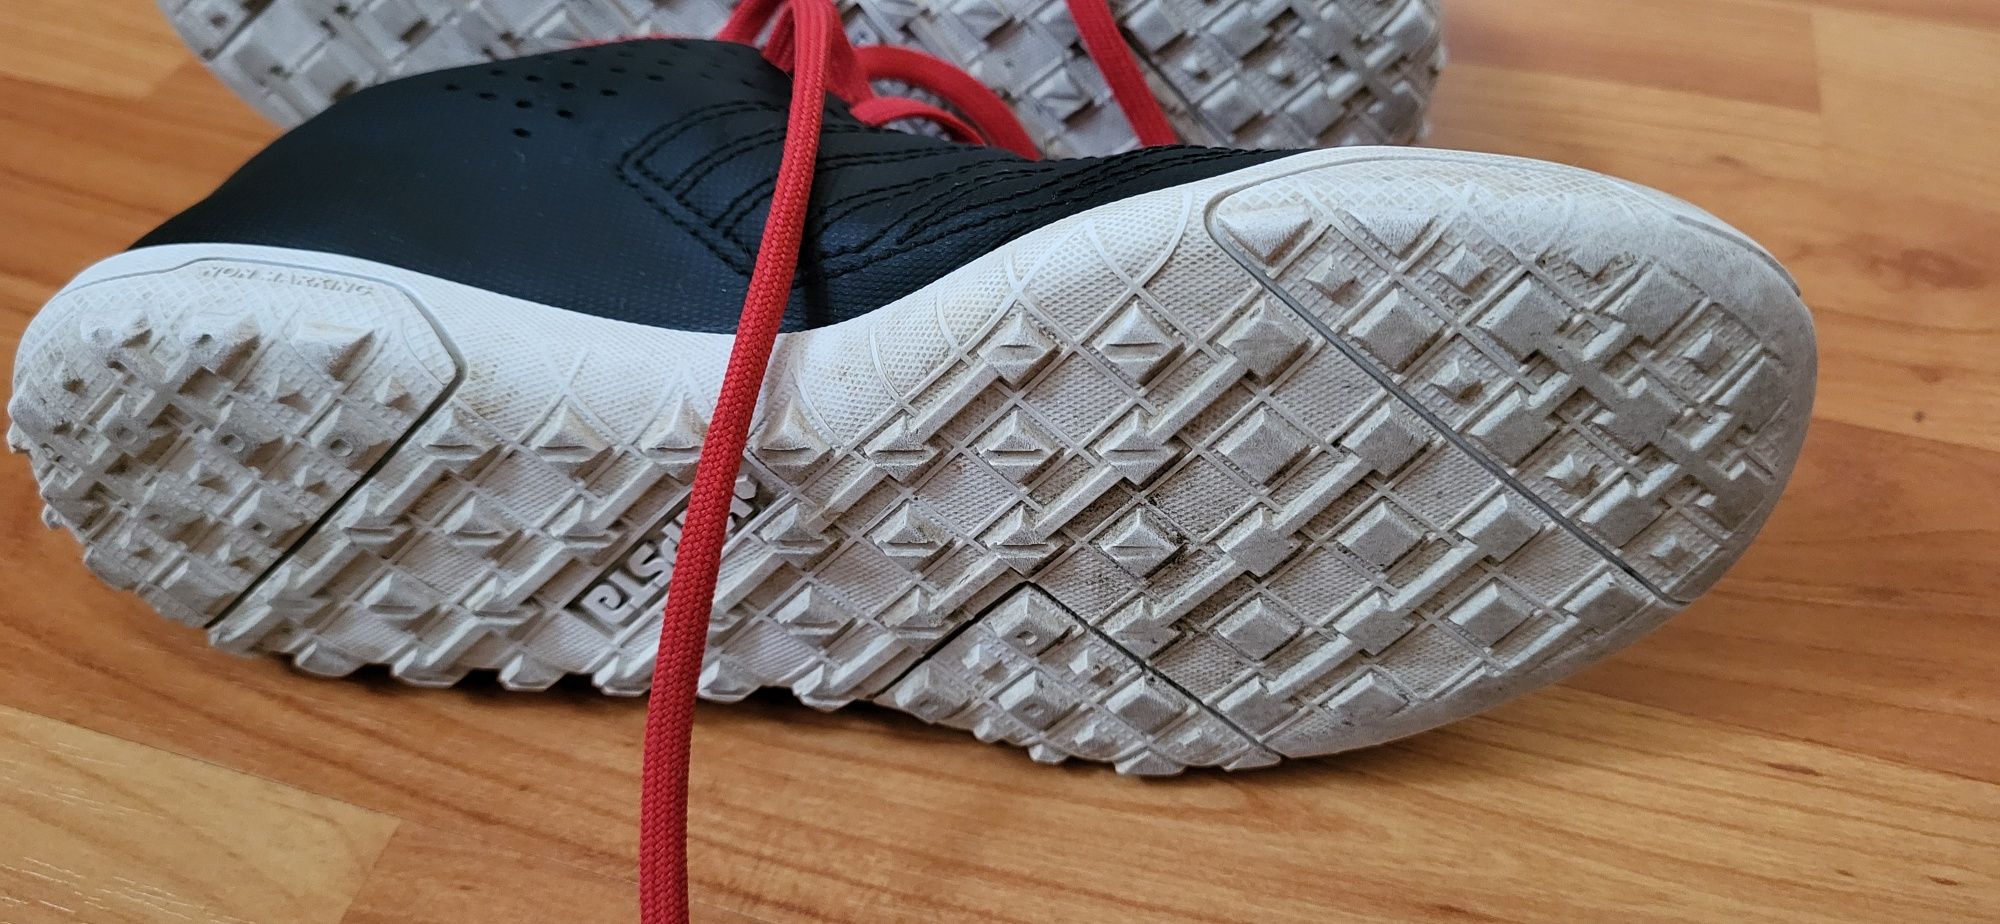 Vand pantof sport Kipsta copii,marimea 32(20 cm)